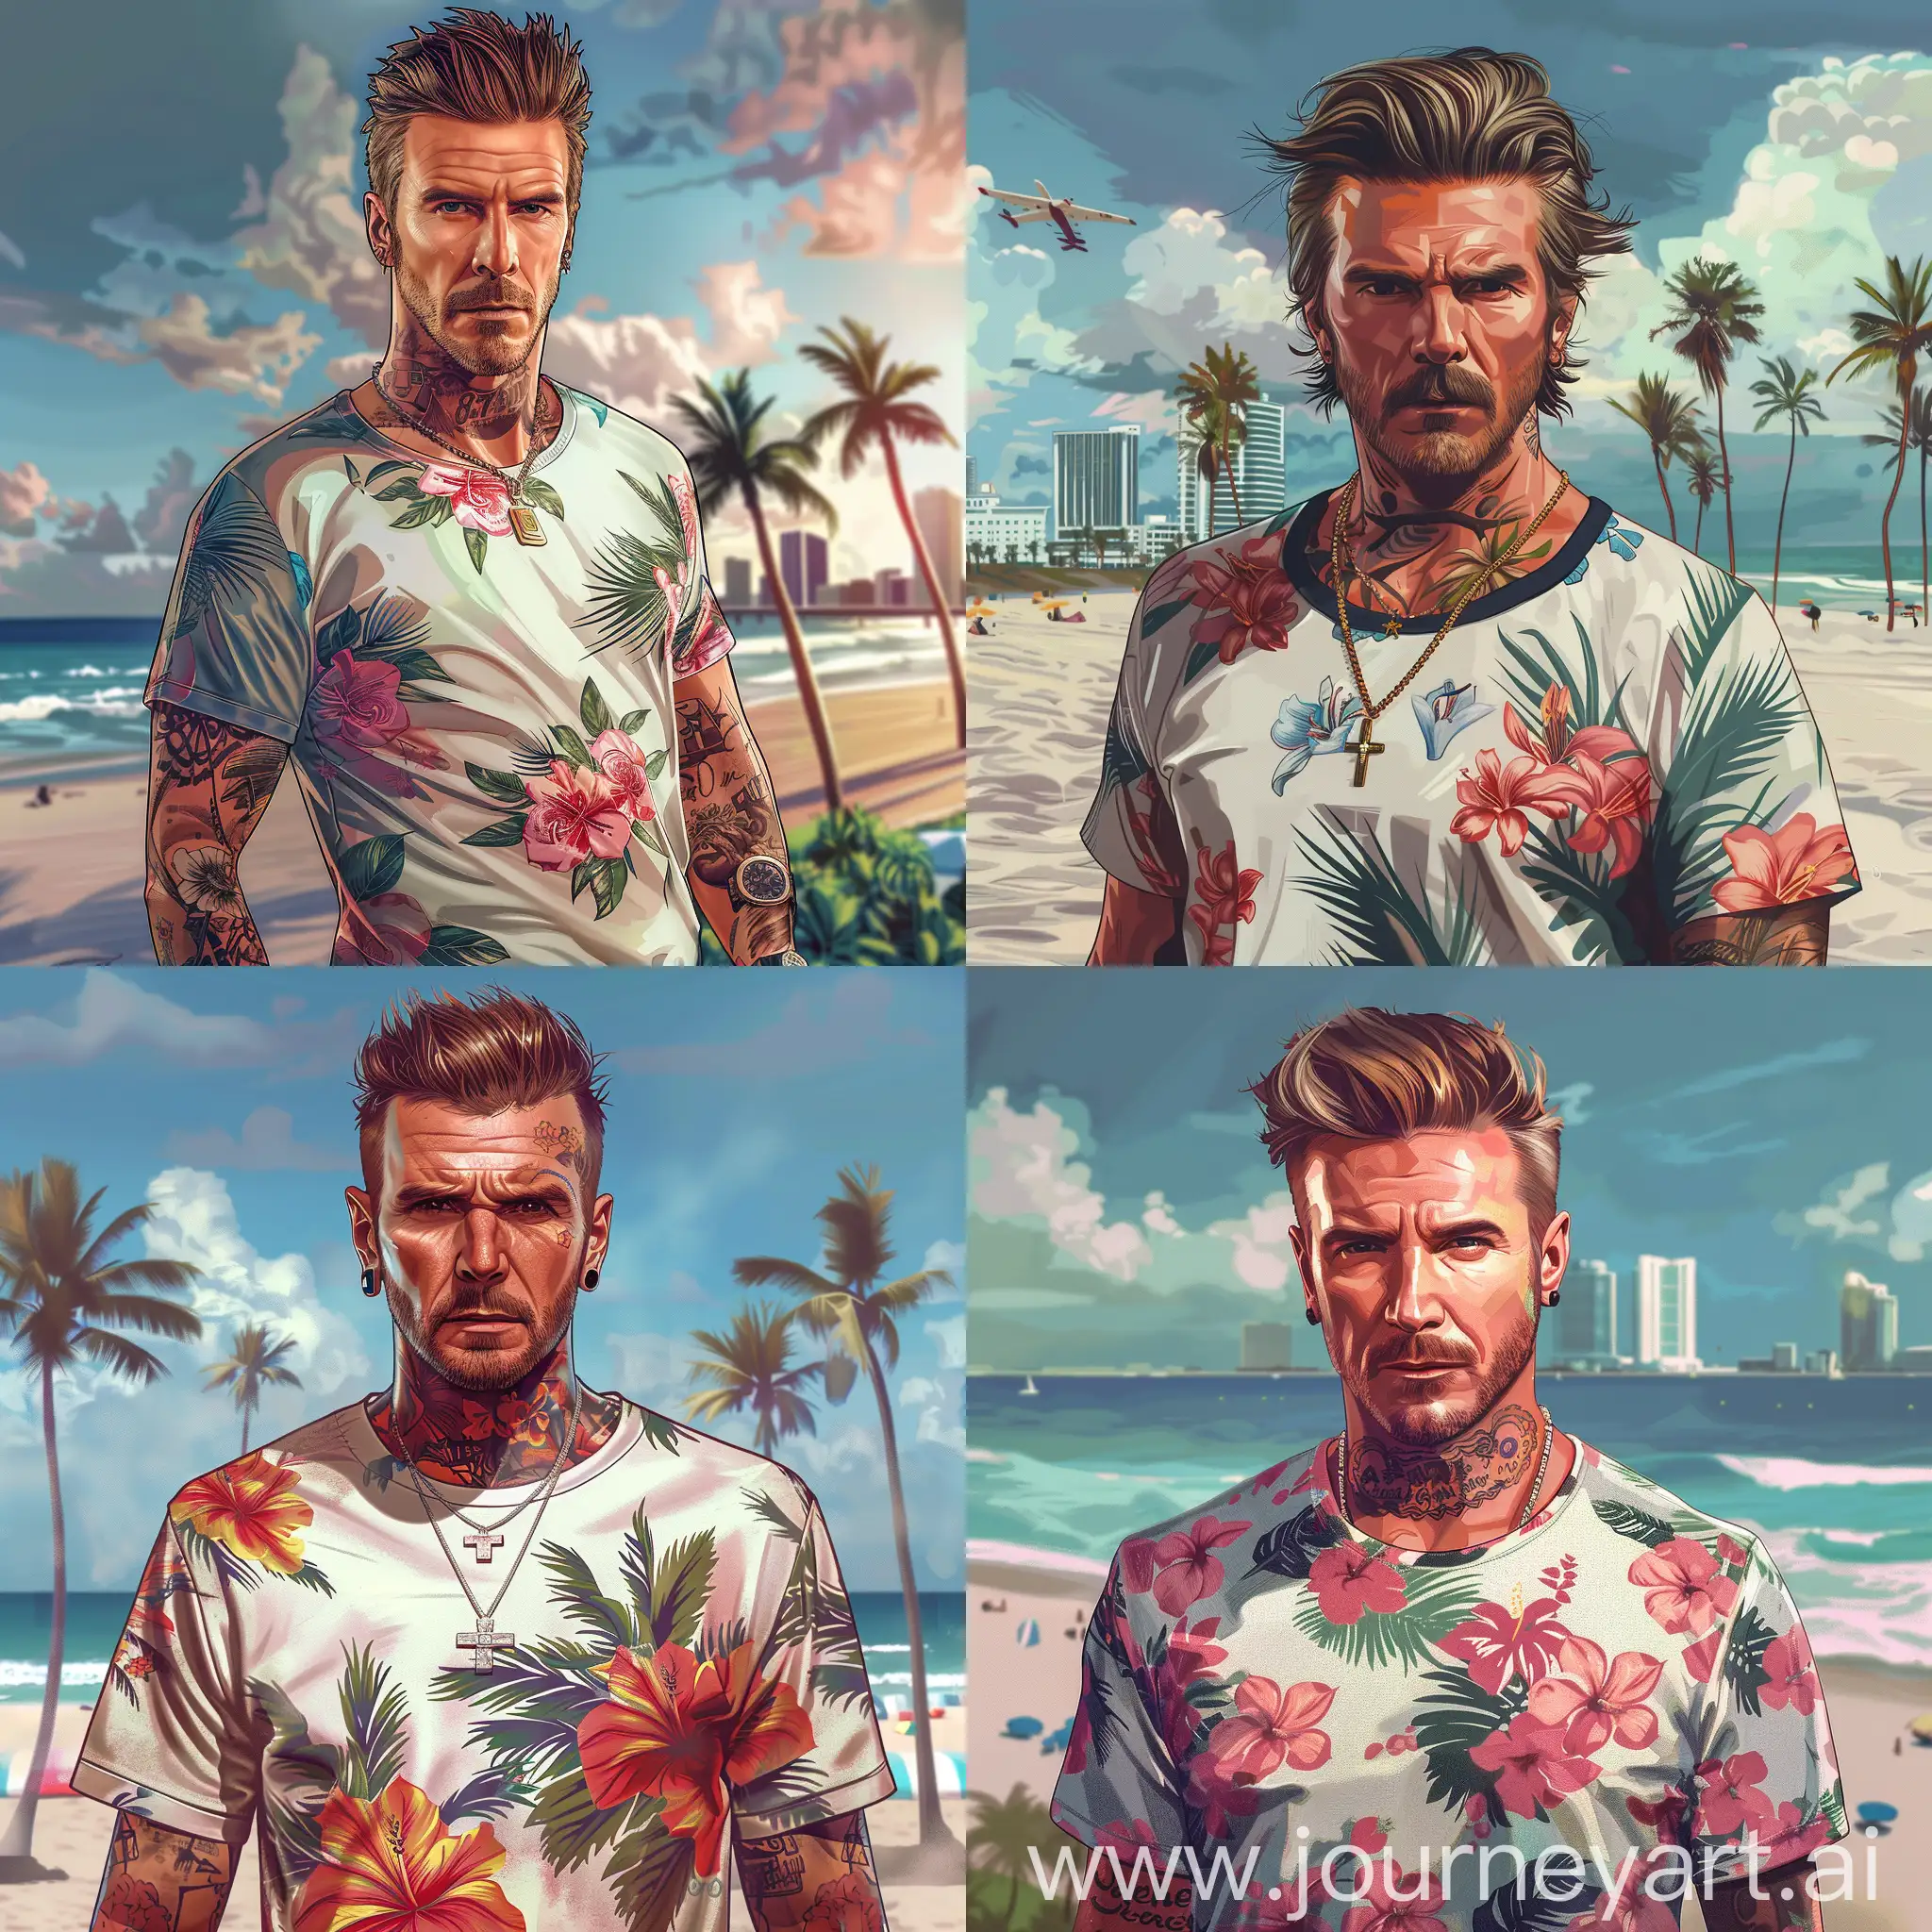 David-Beckham-as-Jason-GTA-Style-Portrait-on-Miami-Beach